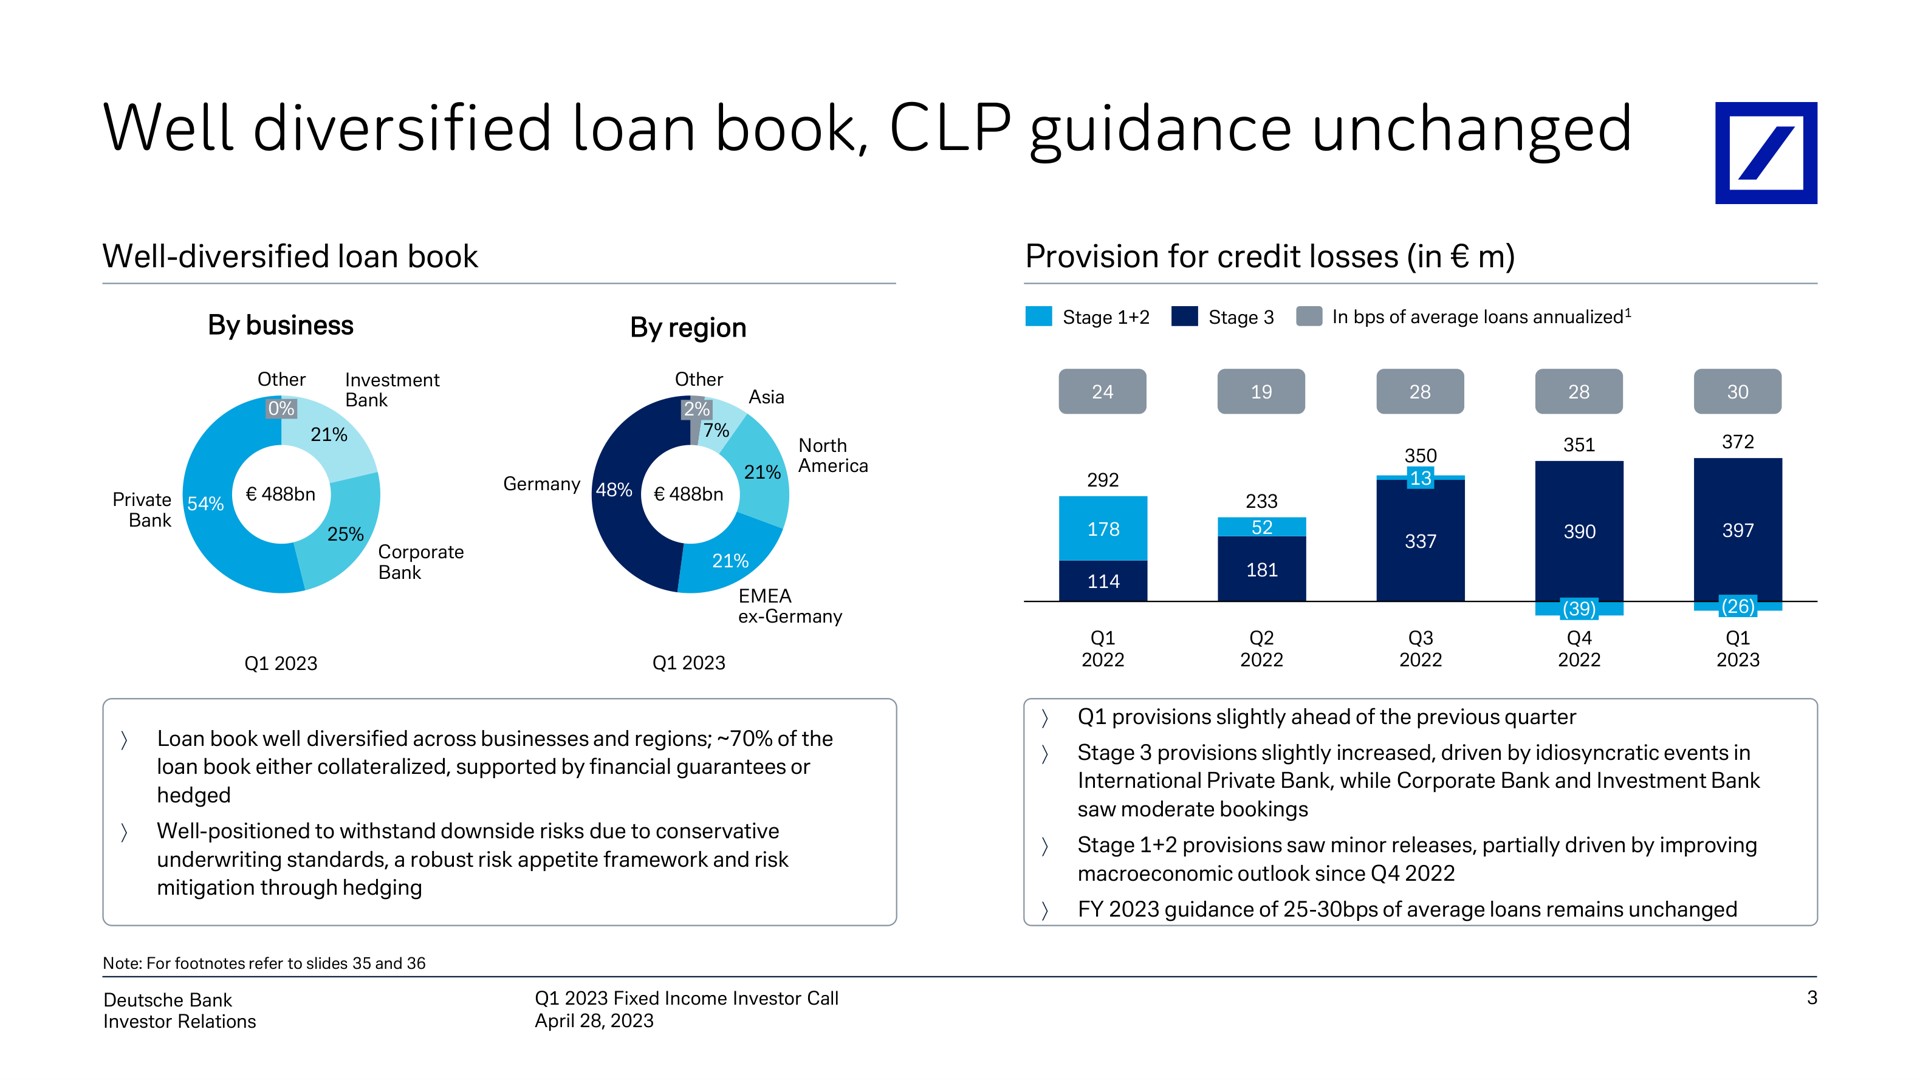 well diversified loan book guidance unchanged | Deutsche Bank